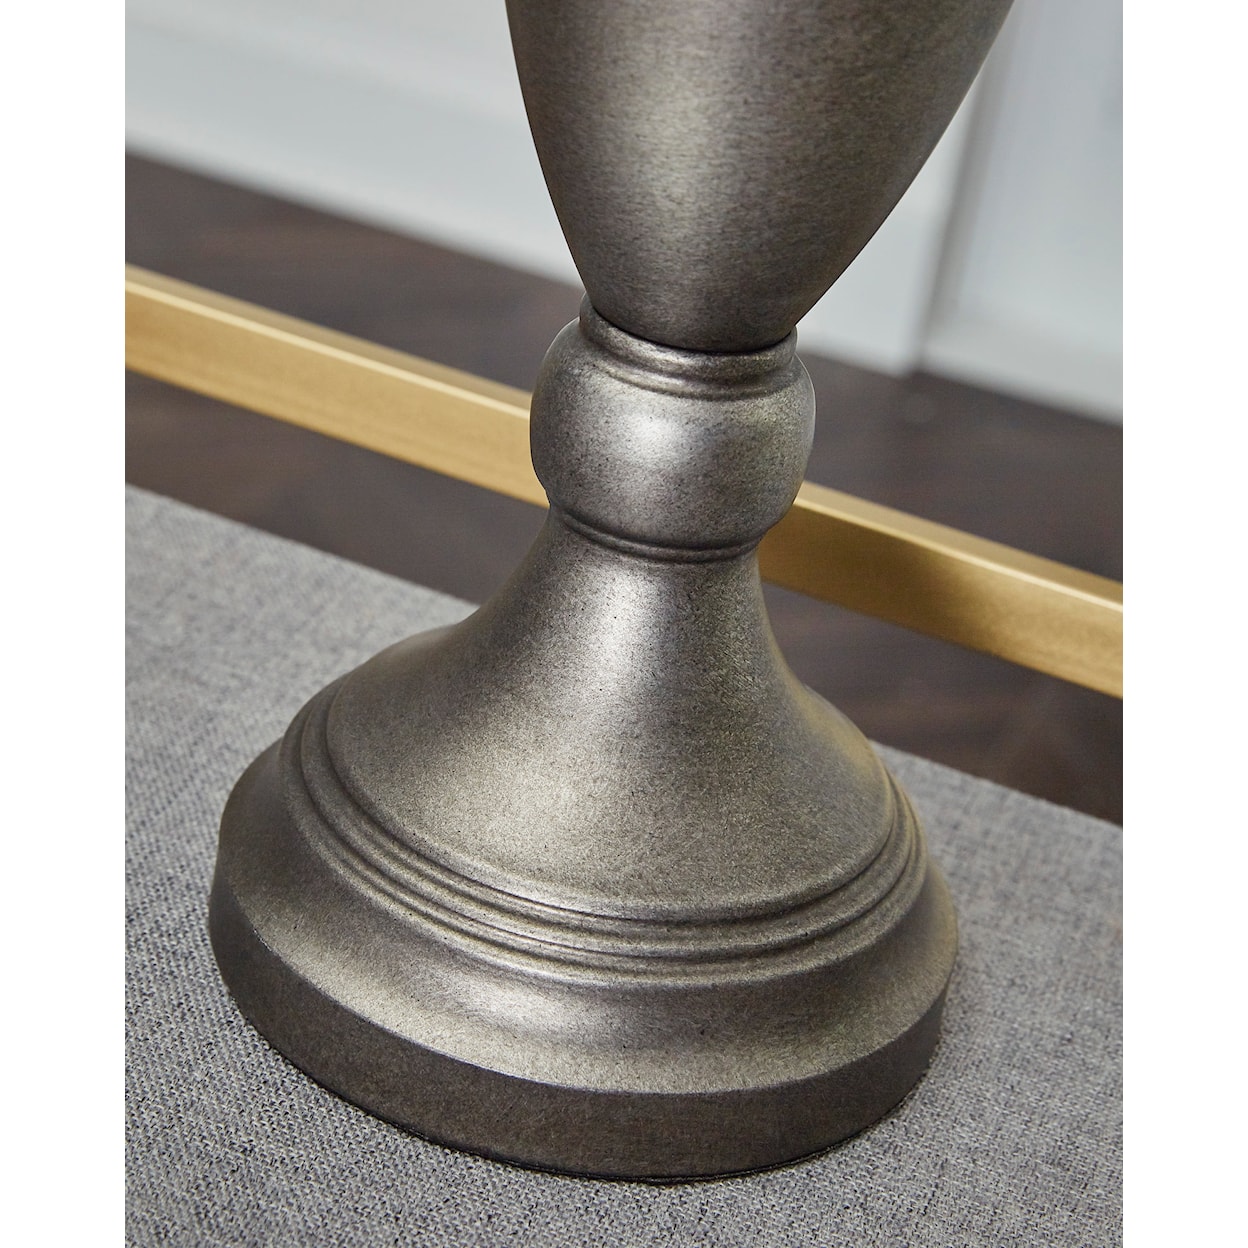 Ashley Signature Design Lamps - Traditional Classics Doraley Table Lamp (Set of 2)